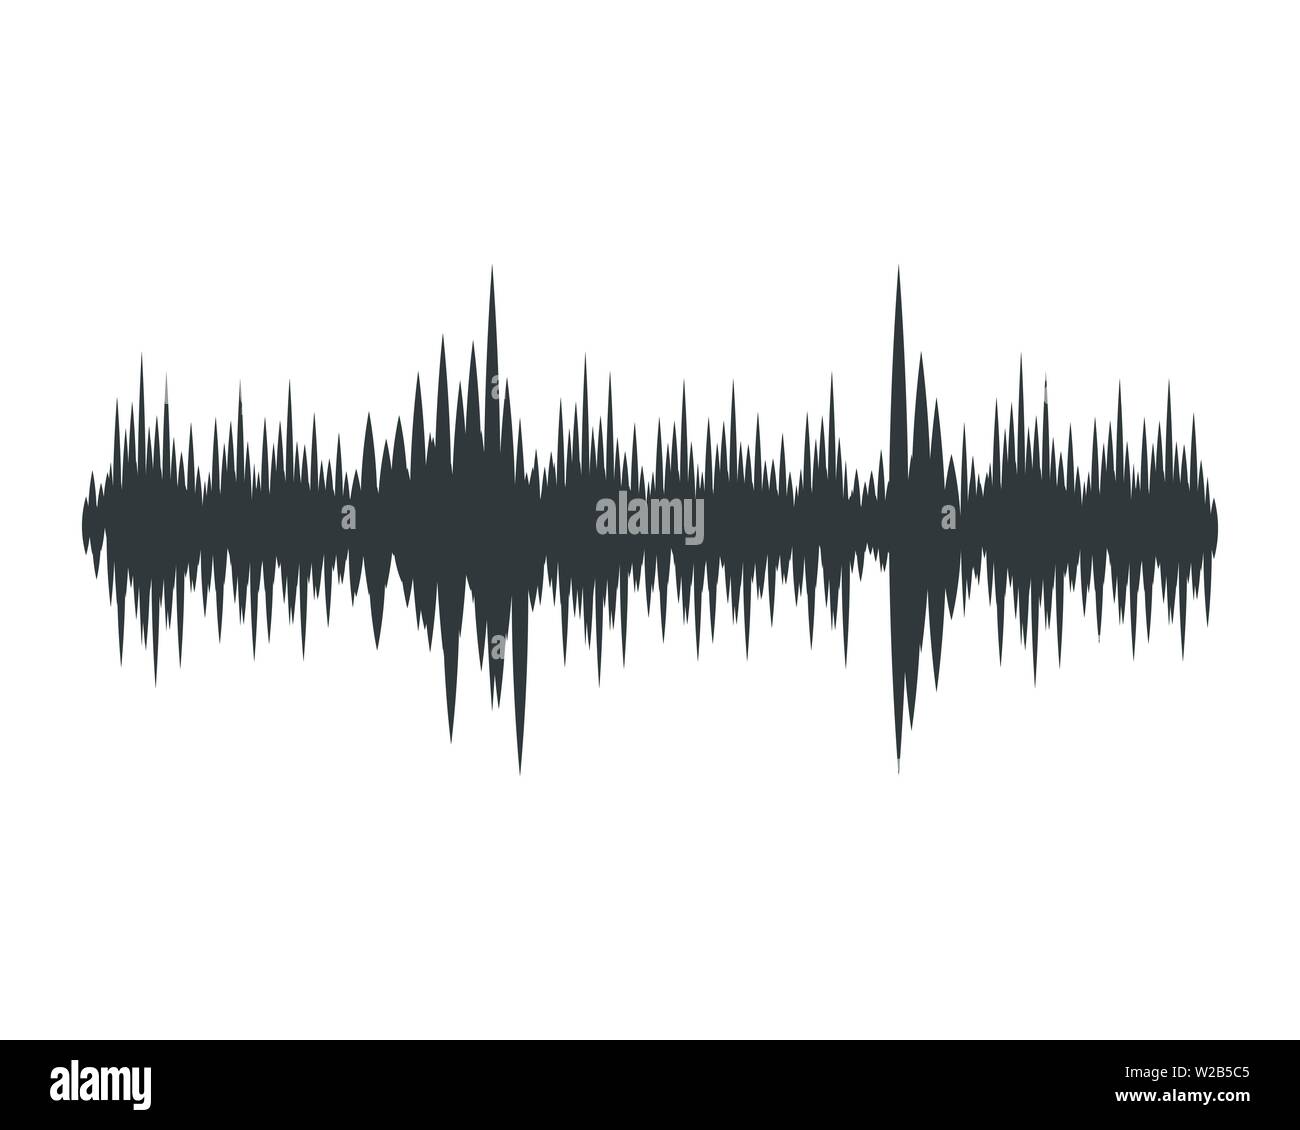 Sound waves vector illustration design template Stock Vector